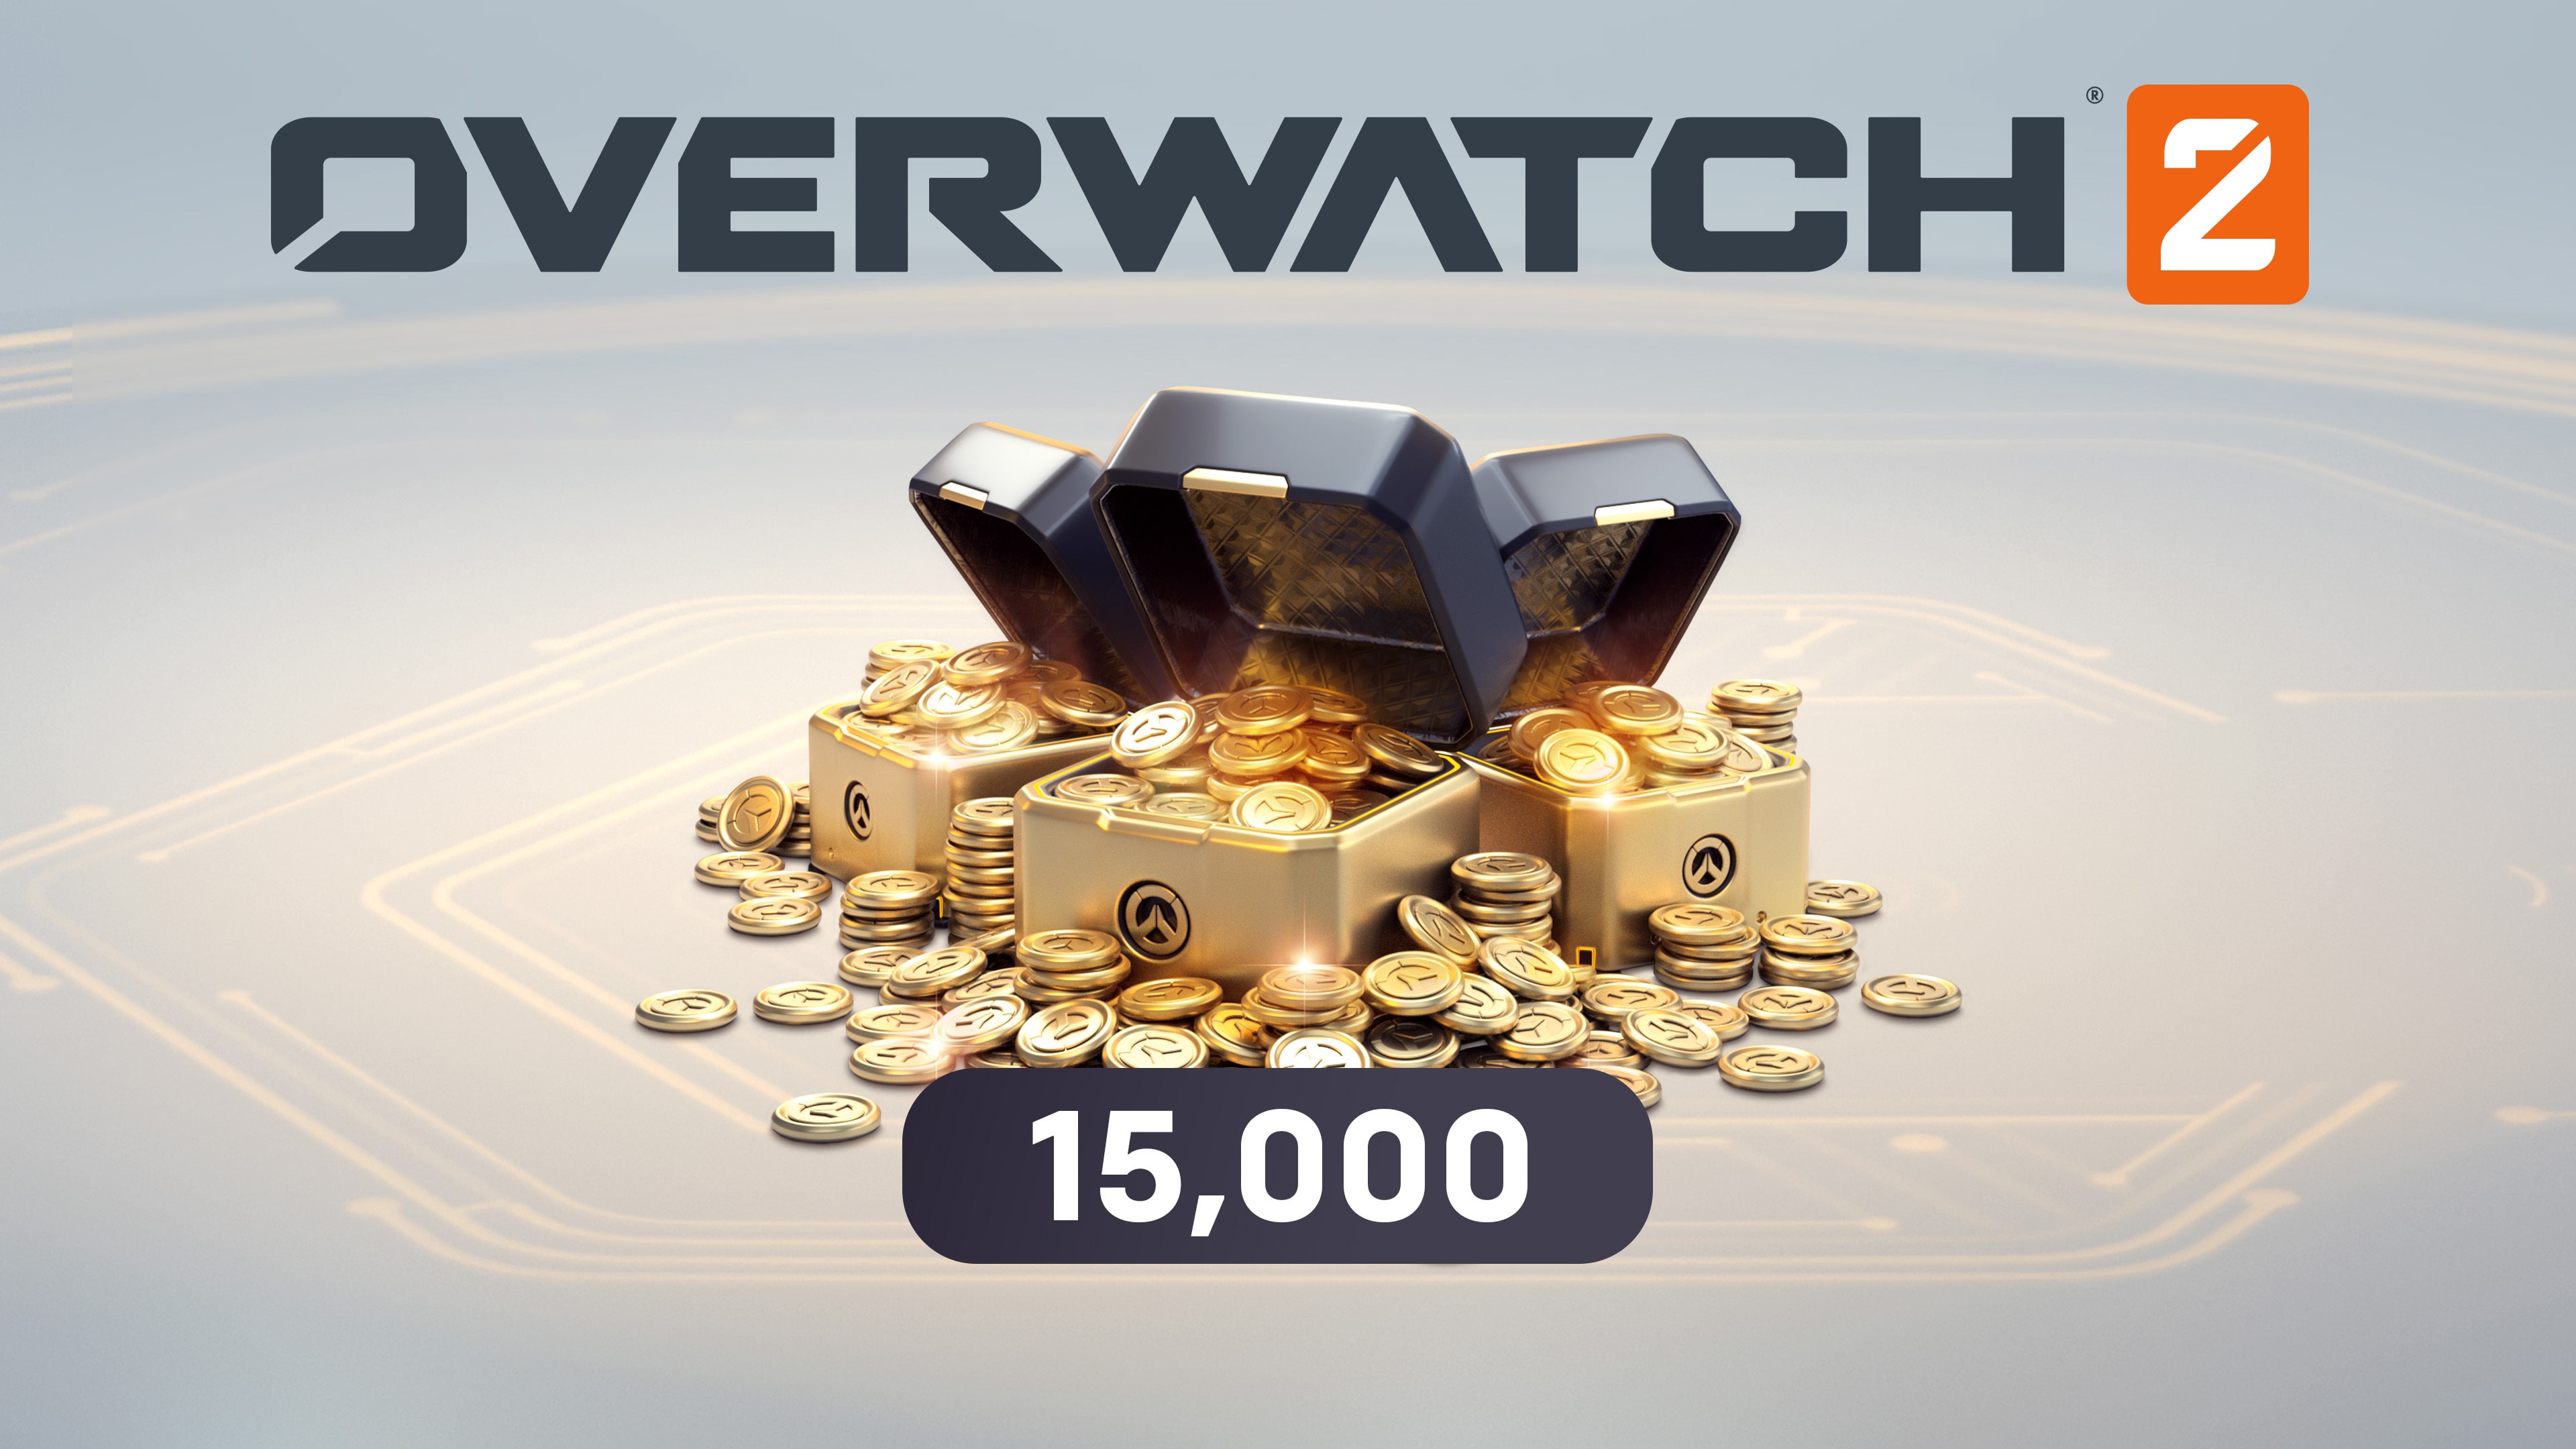 Overwatch® 2 - 10000 (+5000 Bonus) Overwatch Coins - Limited Time!